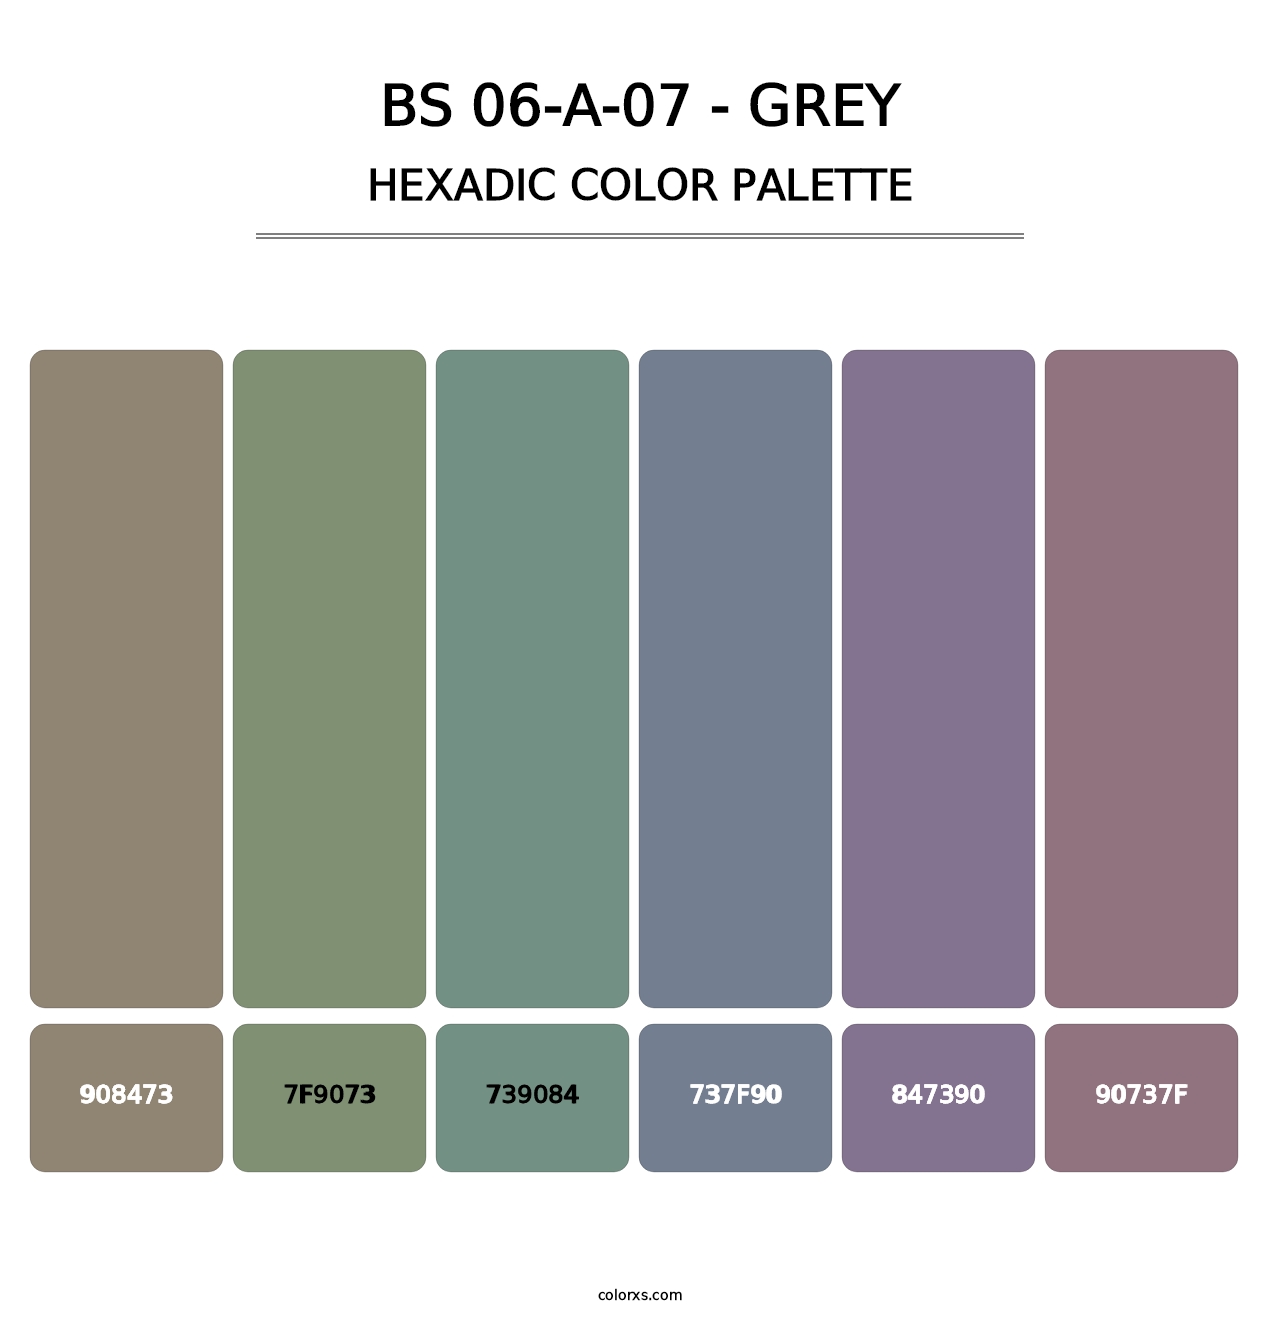 BS 06-A-07 - Grey - Hexadic Color Palette